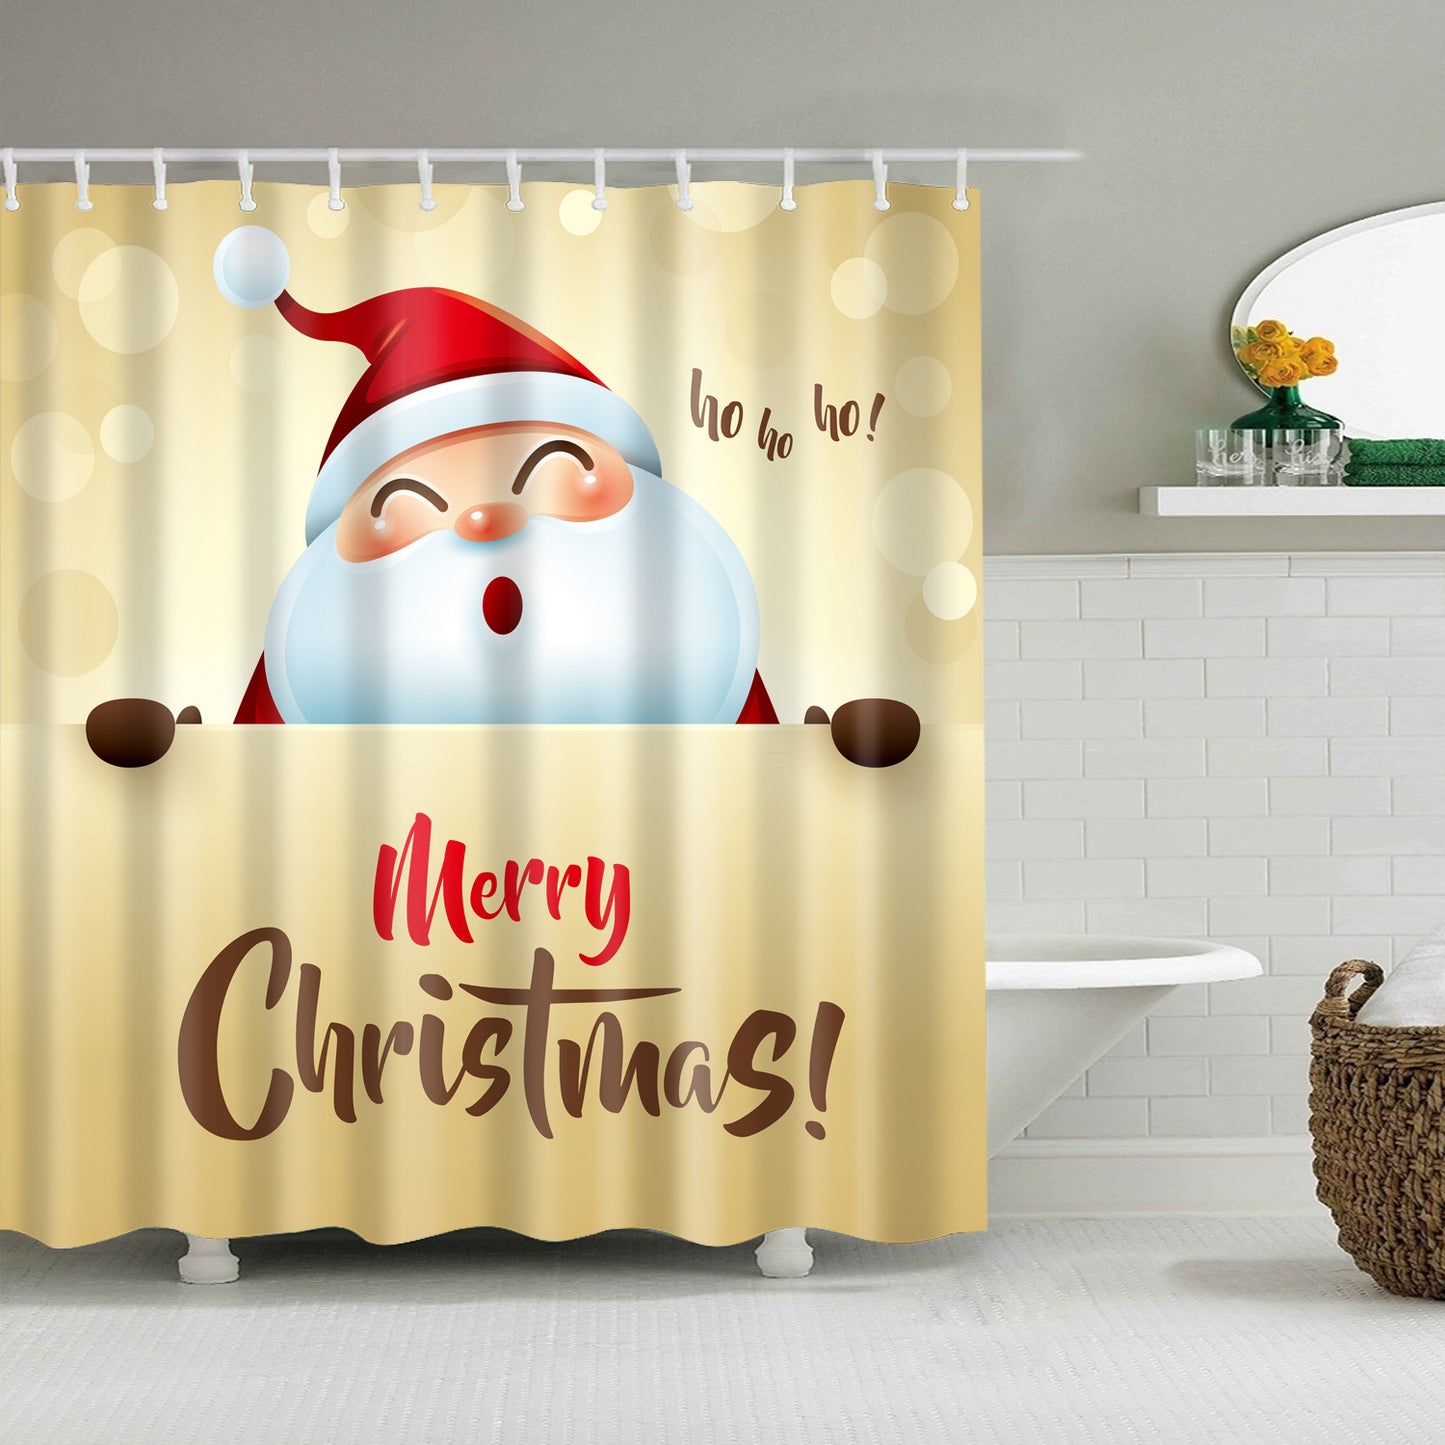 Santa Claus Singing Merry Christmas Shower Curtain